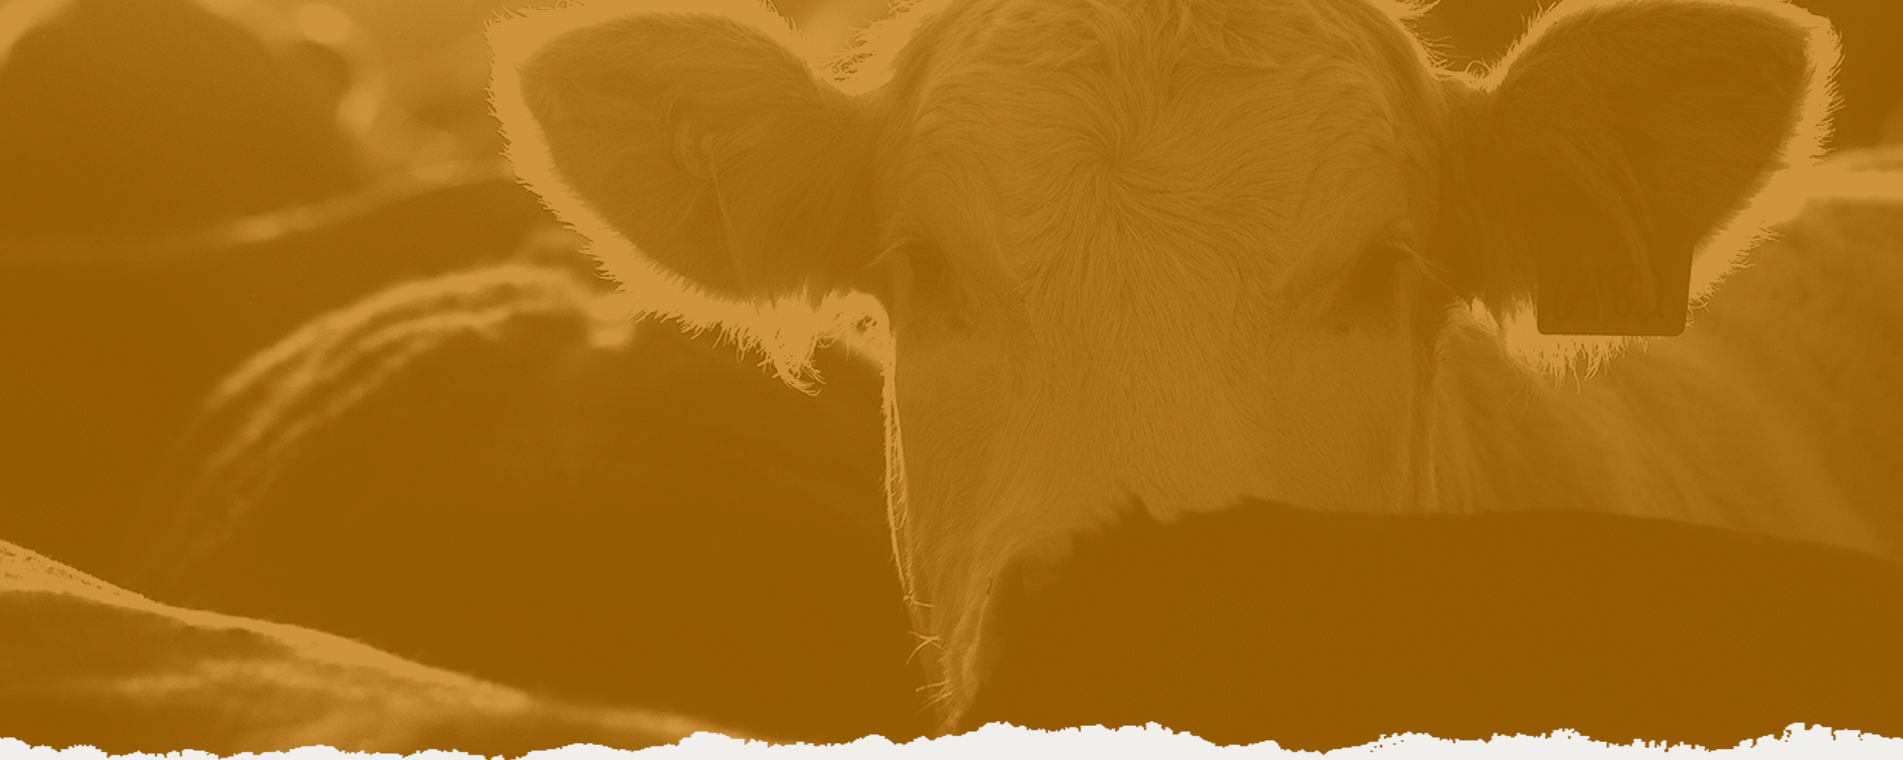 Alberta Cattle Feeders’ Association Seeking Communications Manager